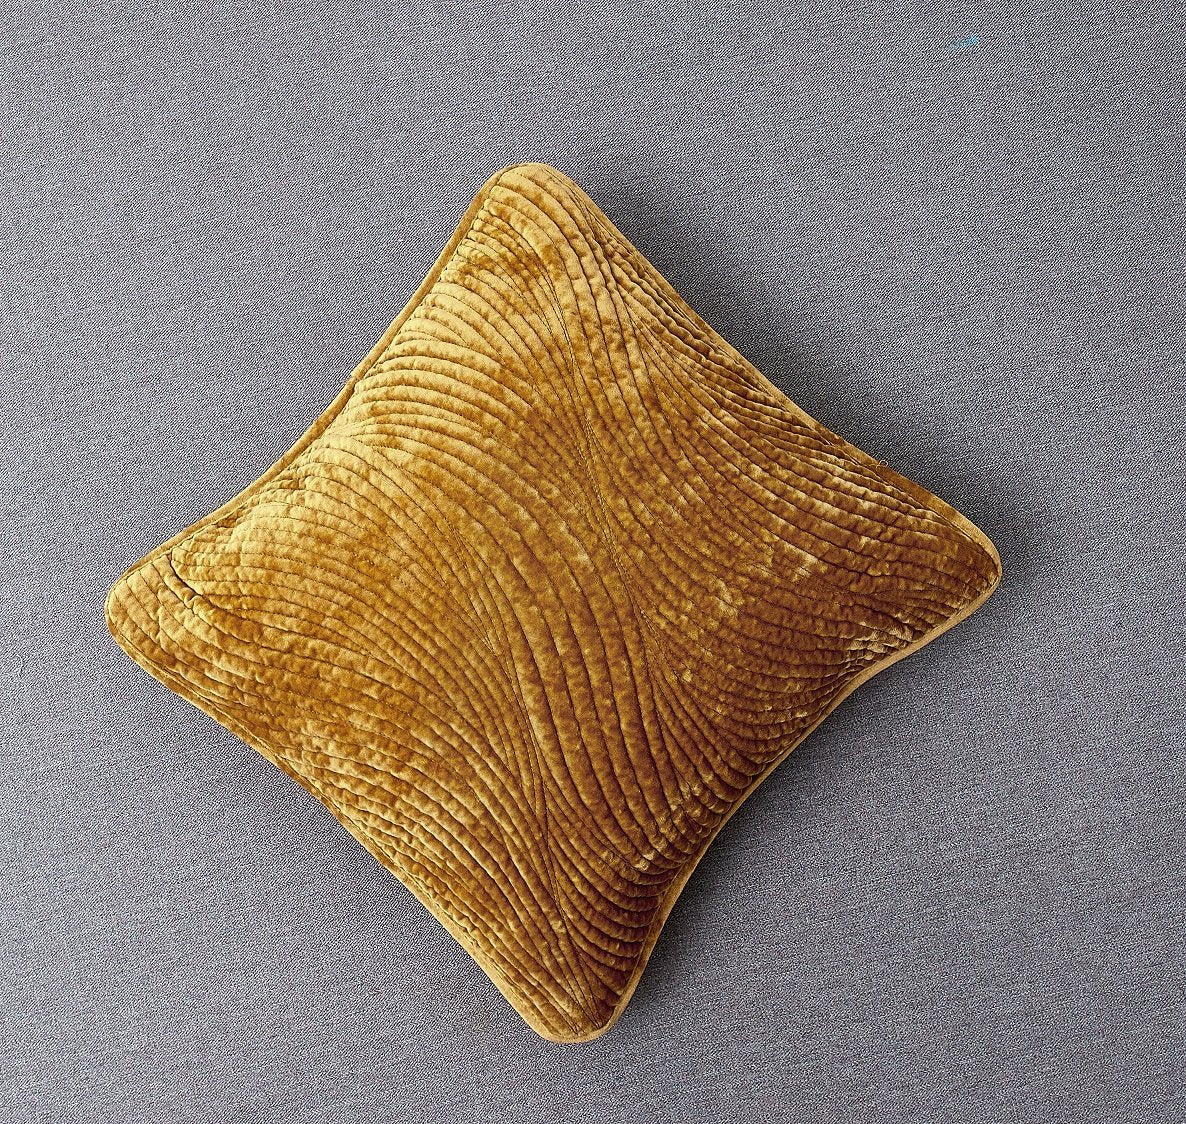 Tache Velvet Dreams Melted Gold Plush Waves Cushion Covers / Euro Sham (JHW-852Y) - Tache Home Fashion